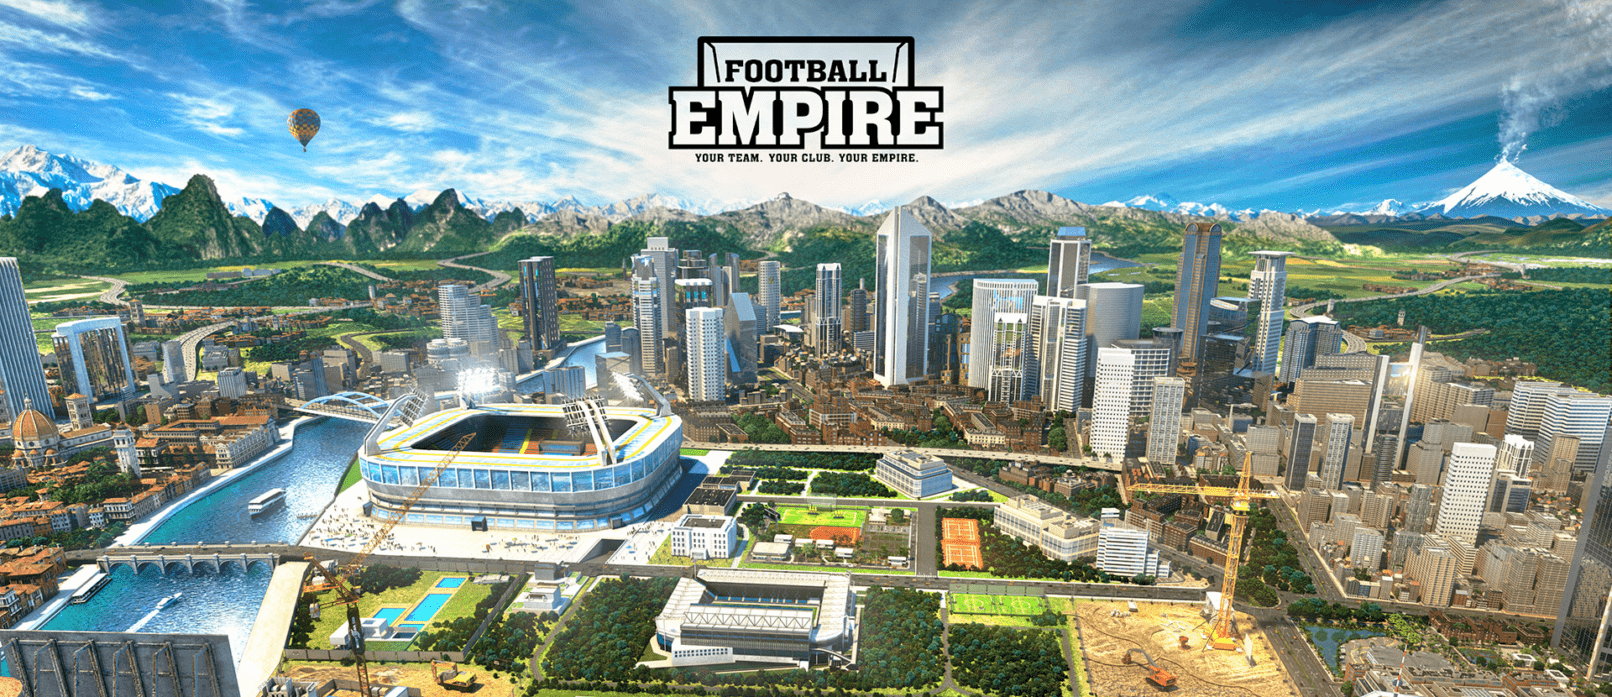 Football Empire mobile game Hero Shot